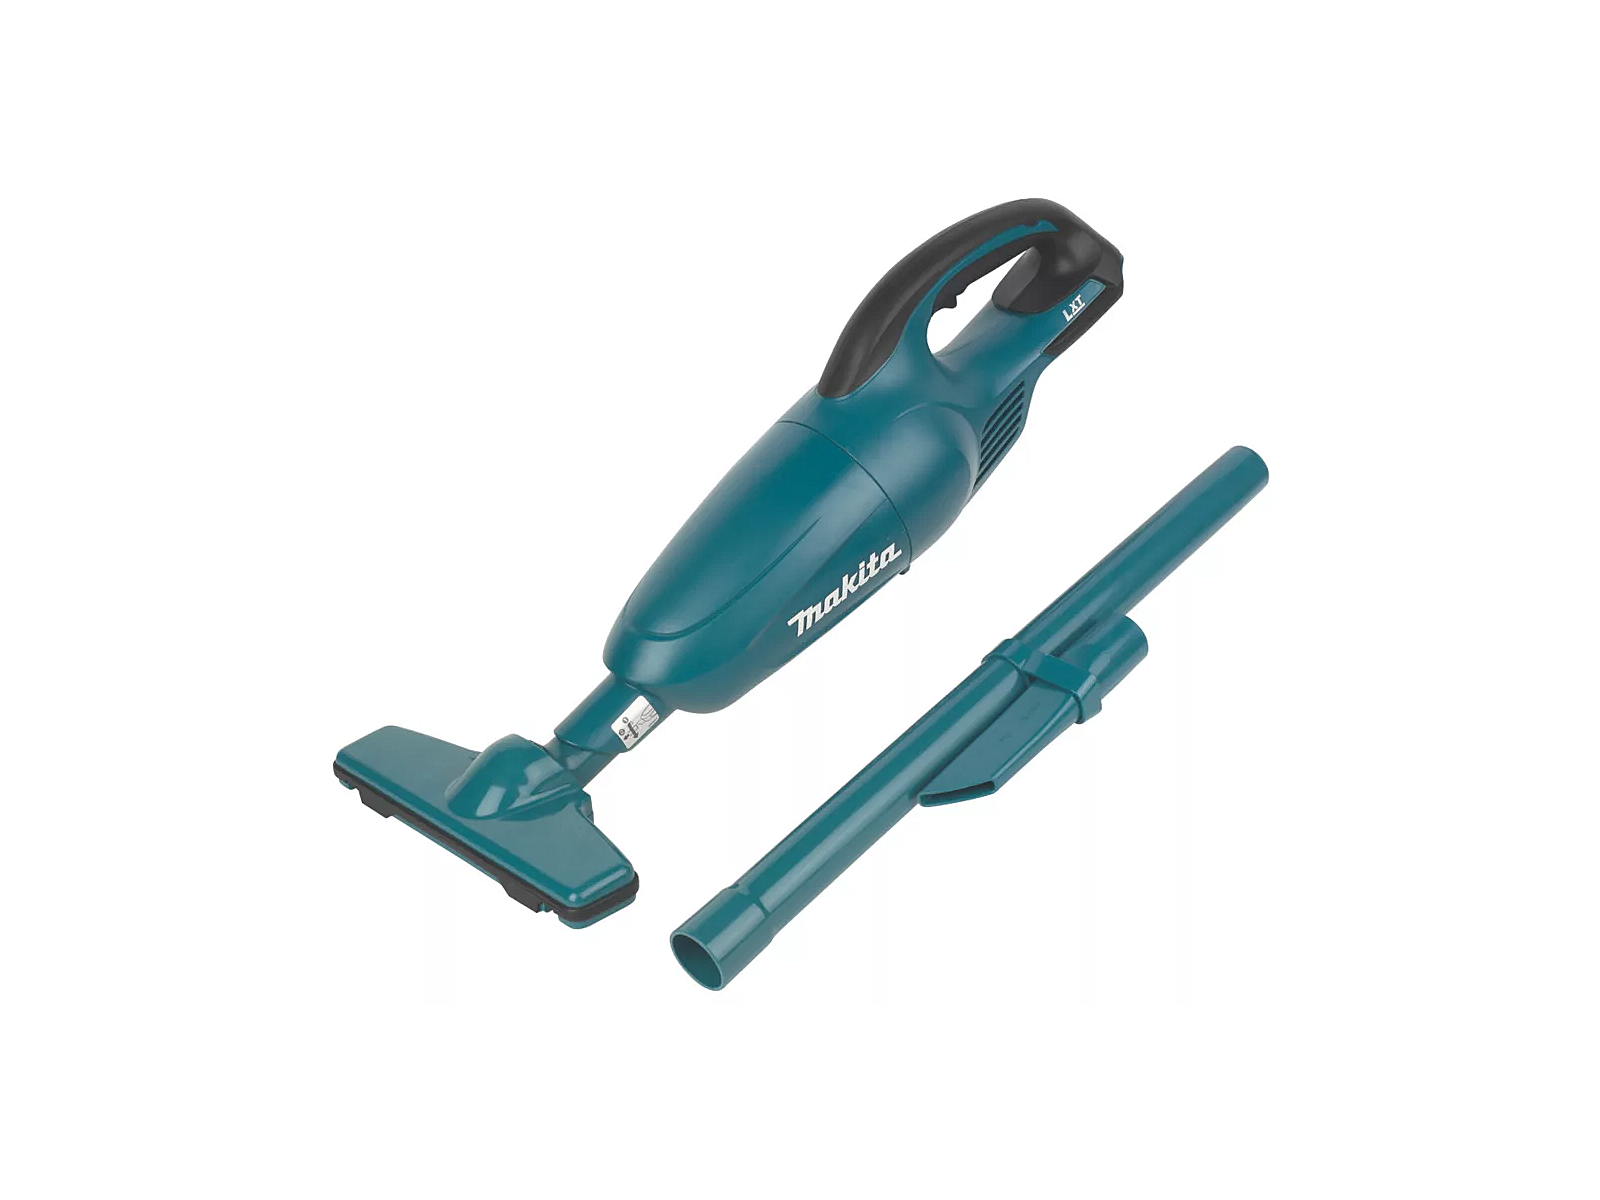 Makita DCL180 DCL182 18v Vacuum Cleaner Black Blue / Accessories / Bag /  Nozzles